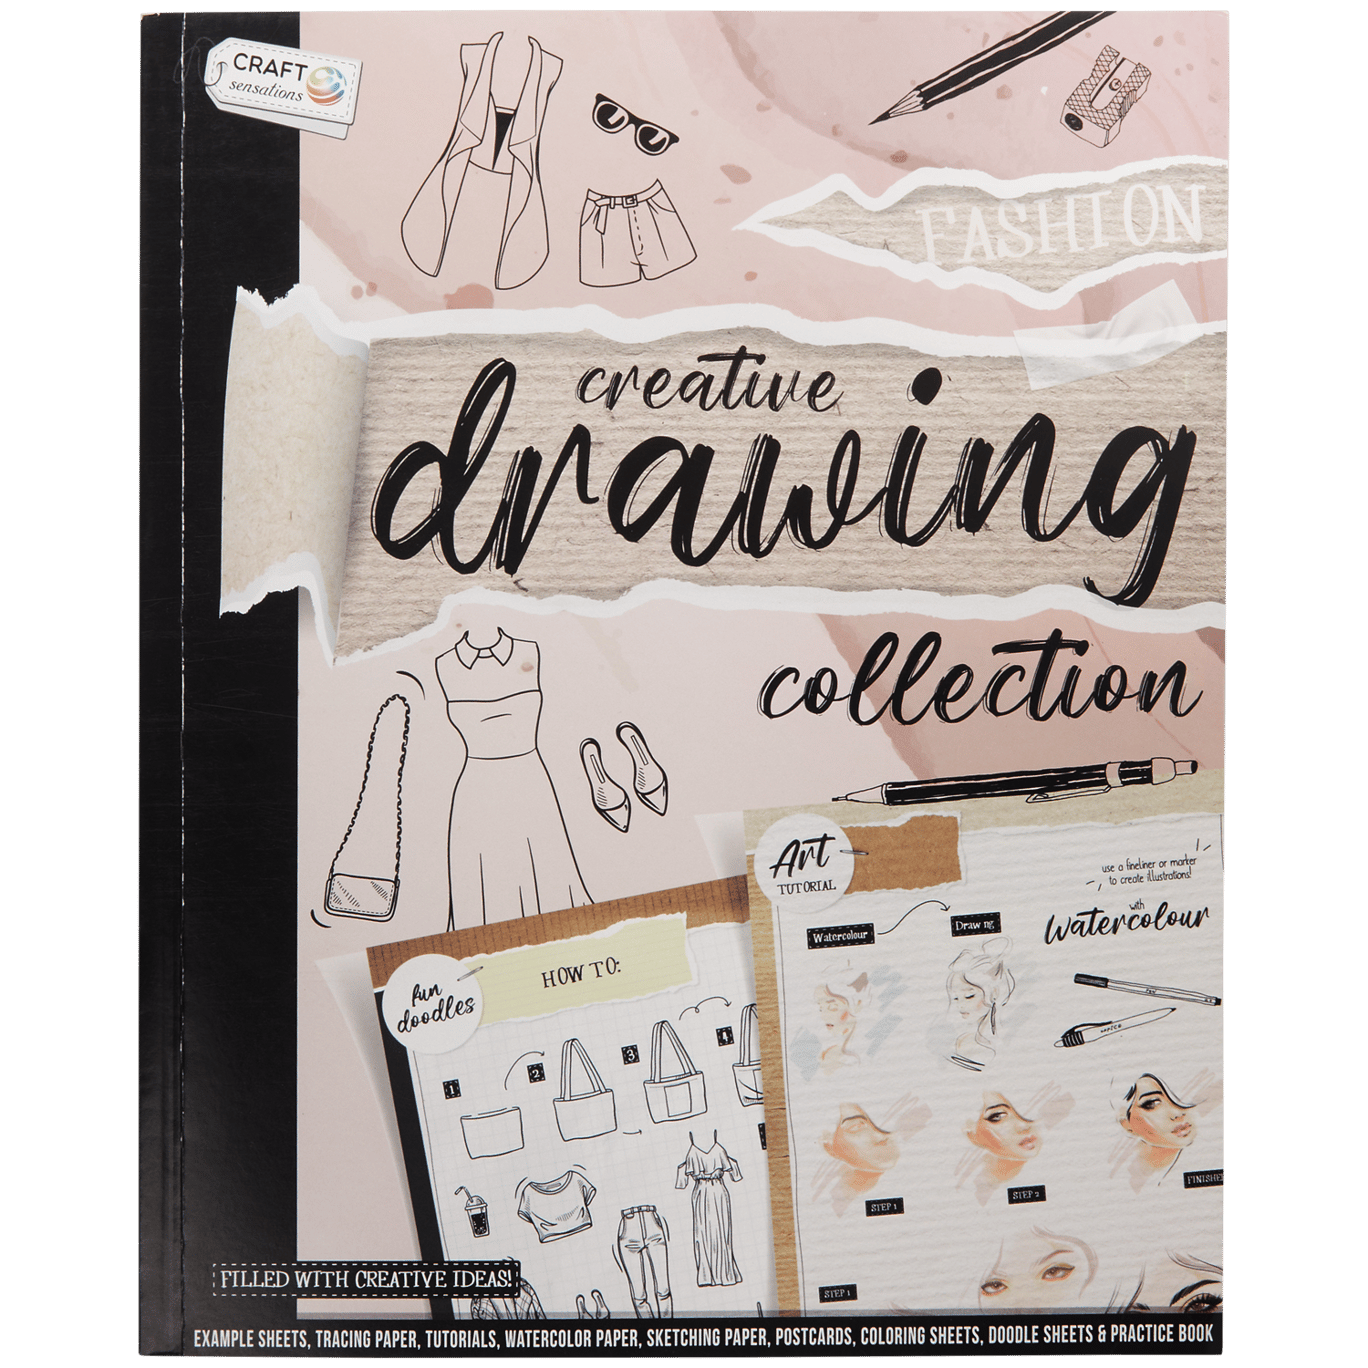 Cuaderno de dibujo Grafix Creative Drawing Collection